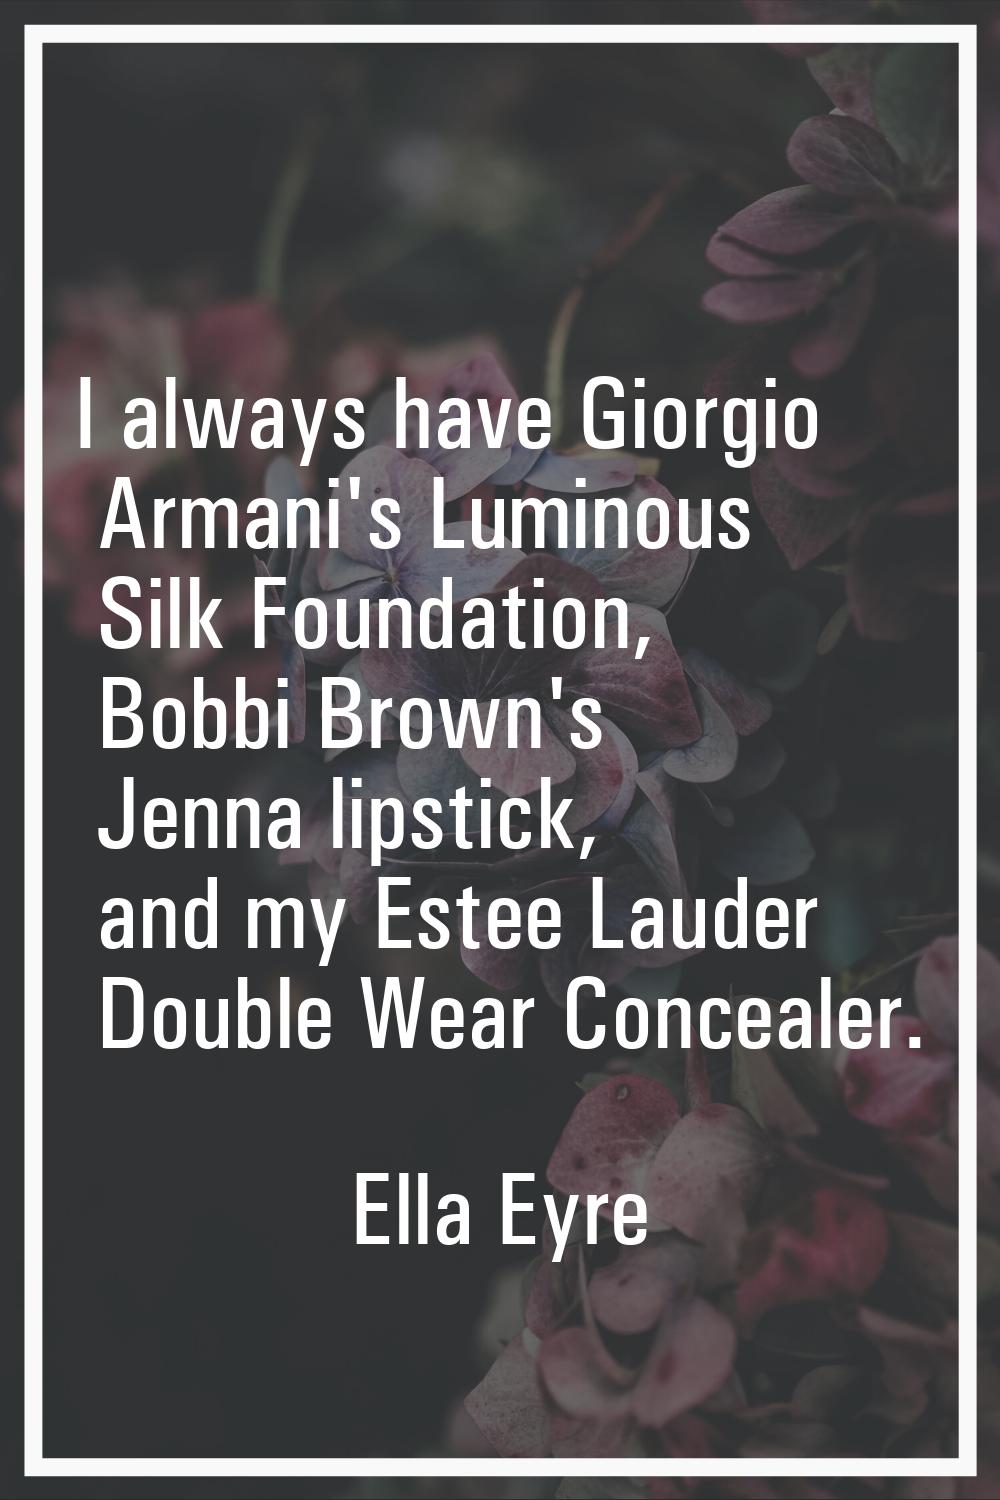 I always have Giorgio Armani's Luminous Silk Foundation, Bobbi Brown's Jenna lipstick, and my Estee